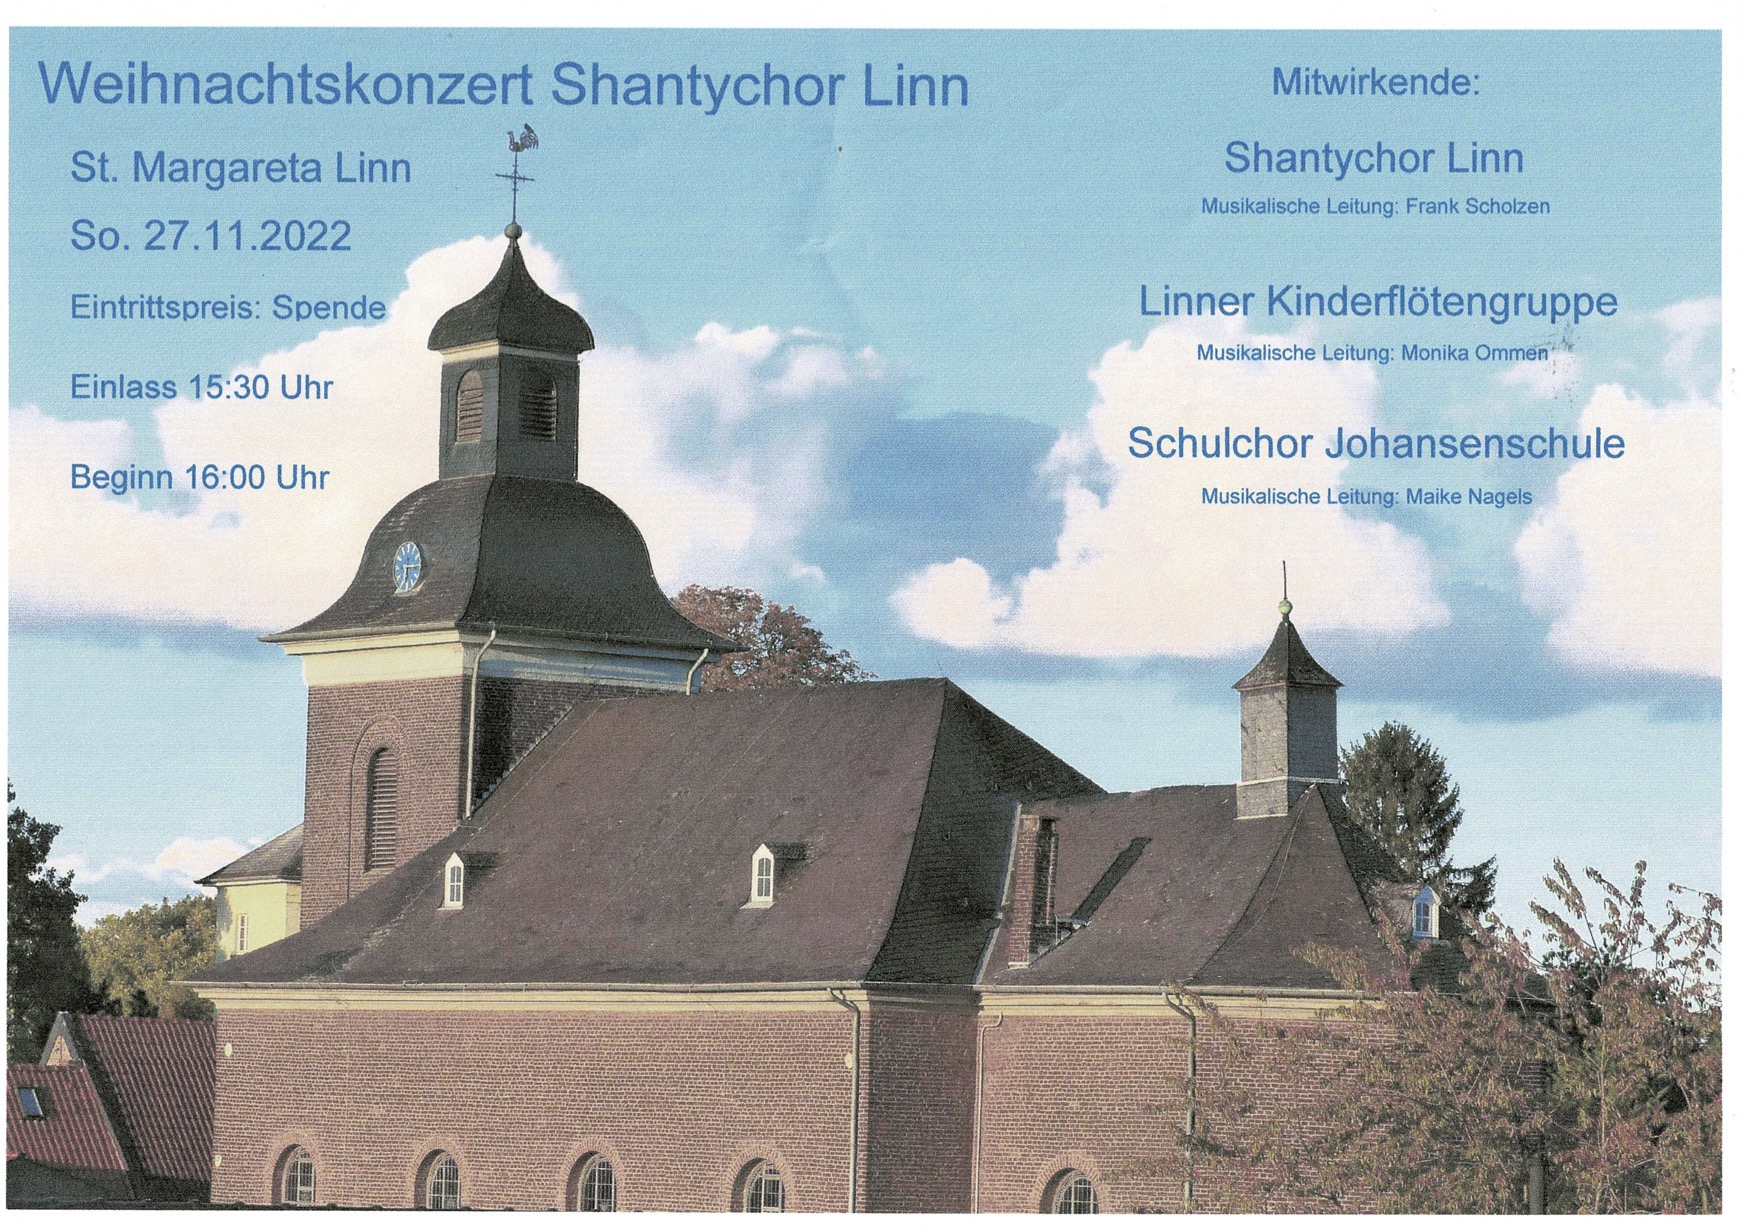 Weihnachtskozert Shantychor Linn 2022 (c) St. Nikolaus Krefeld